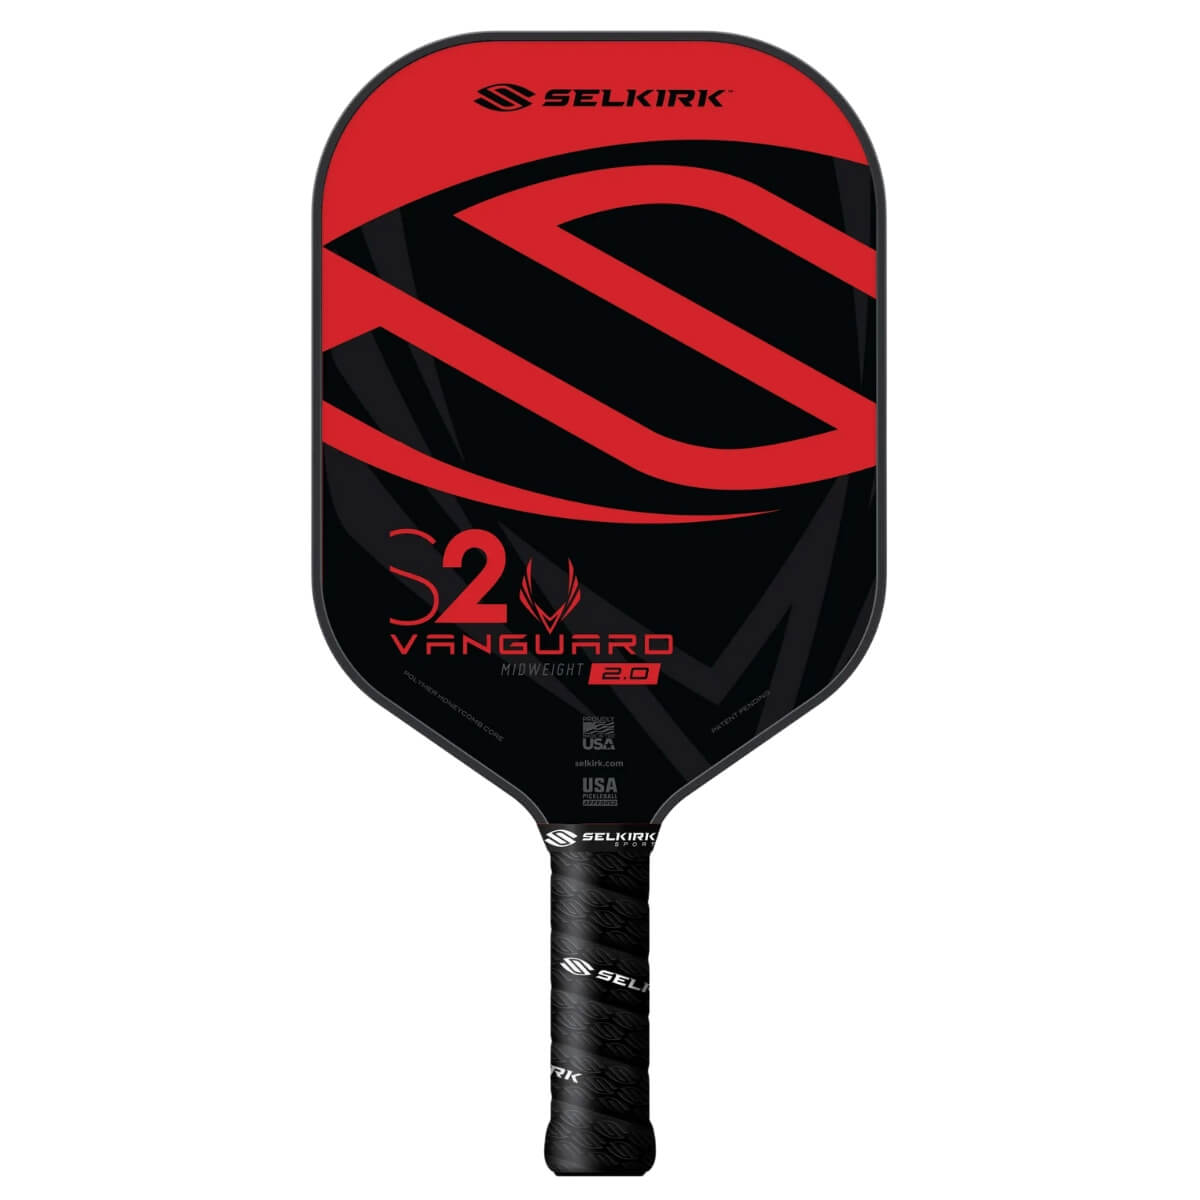 Selkirk Vanguard 2.0 S2 paddle / racket Crimson Black